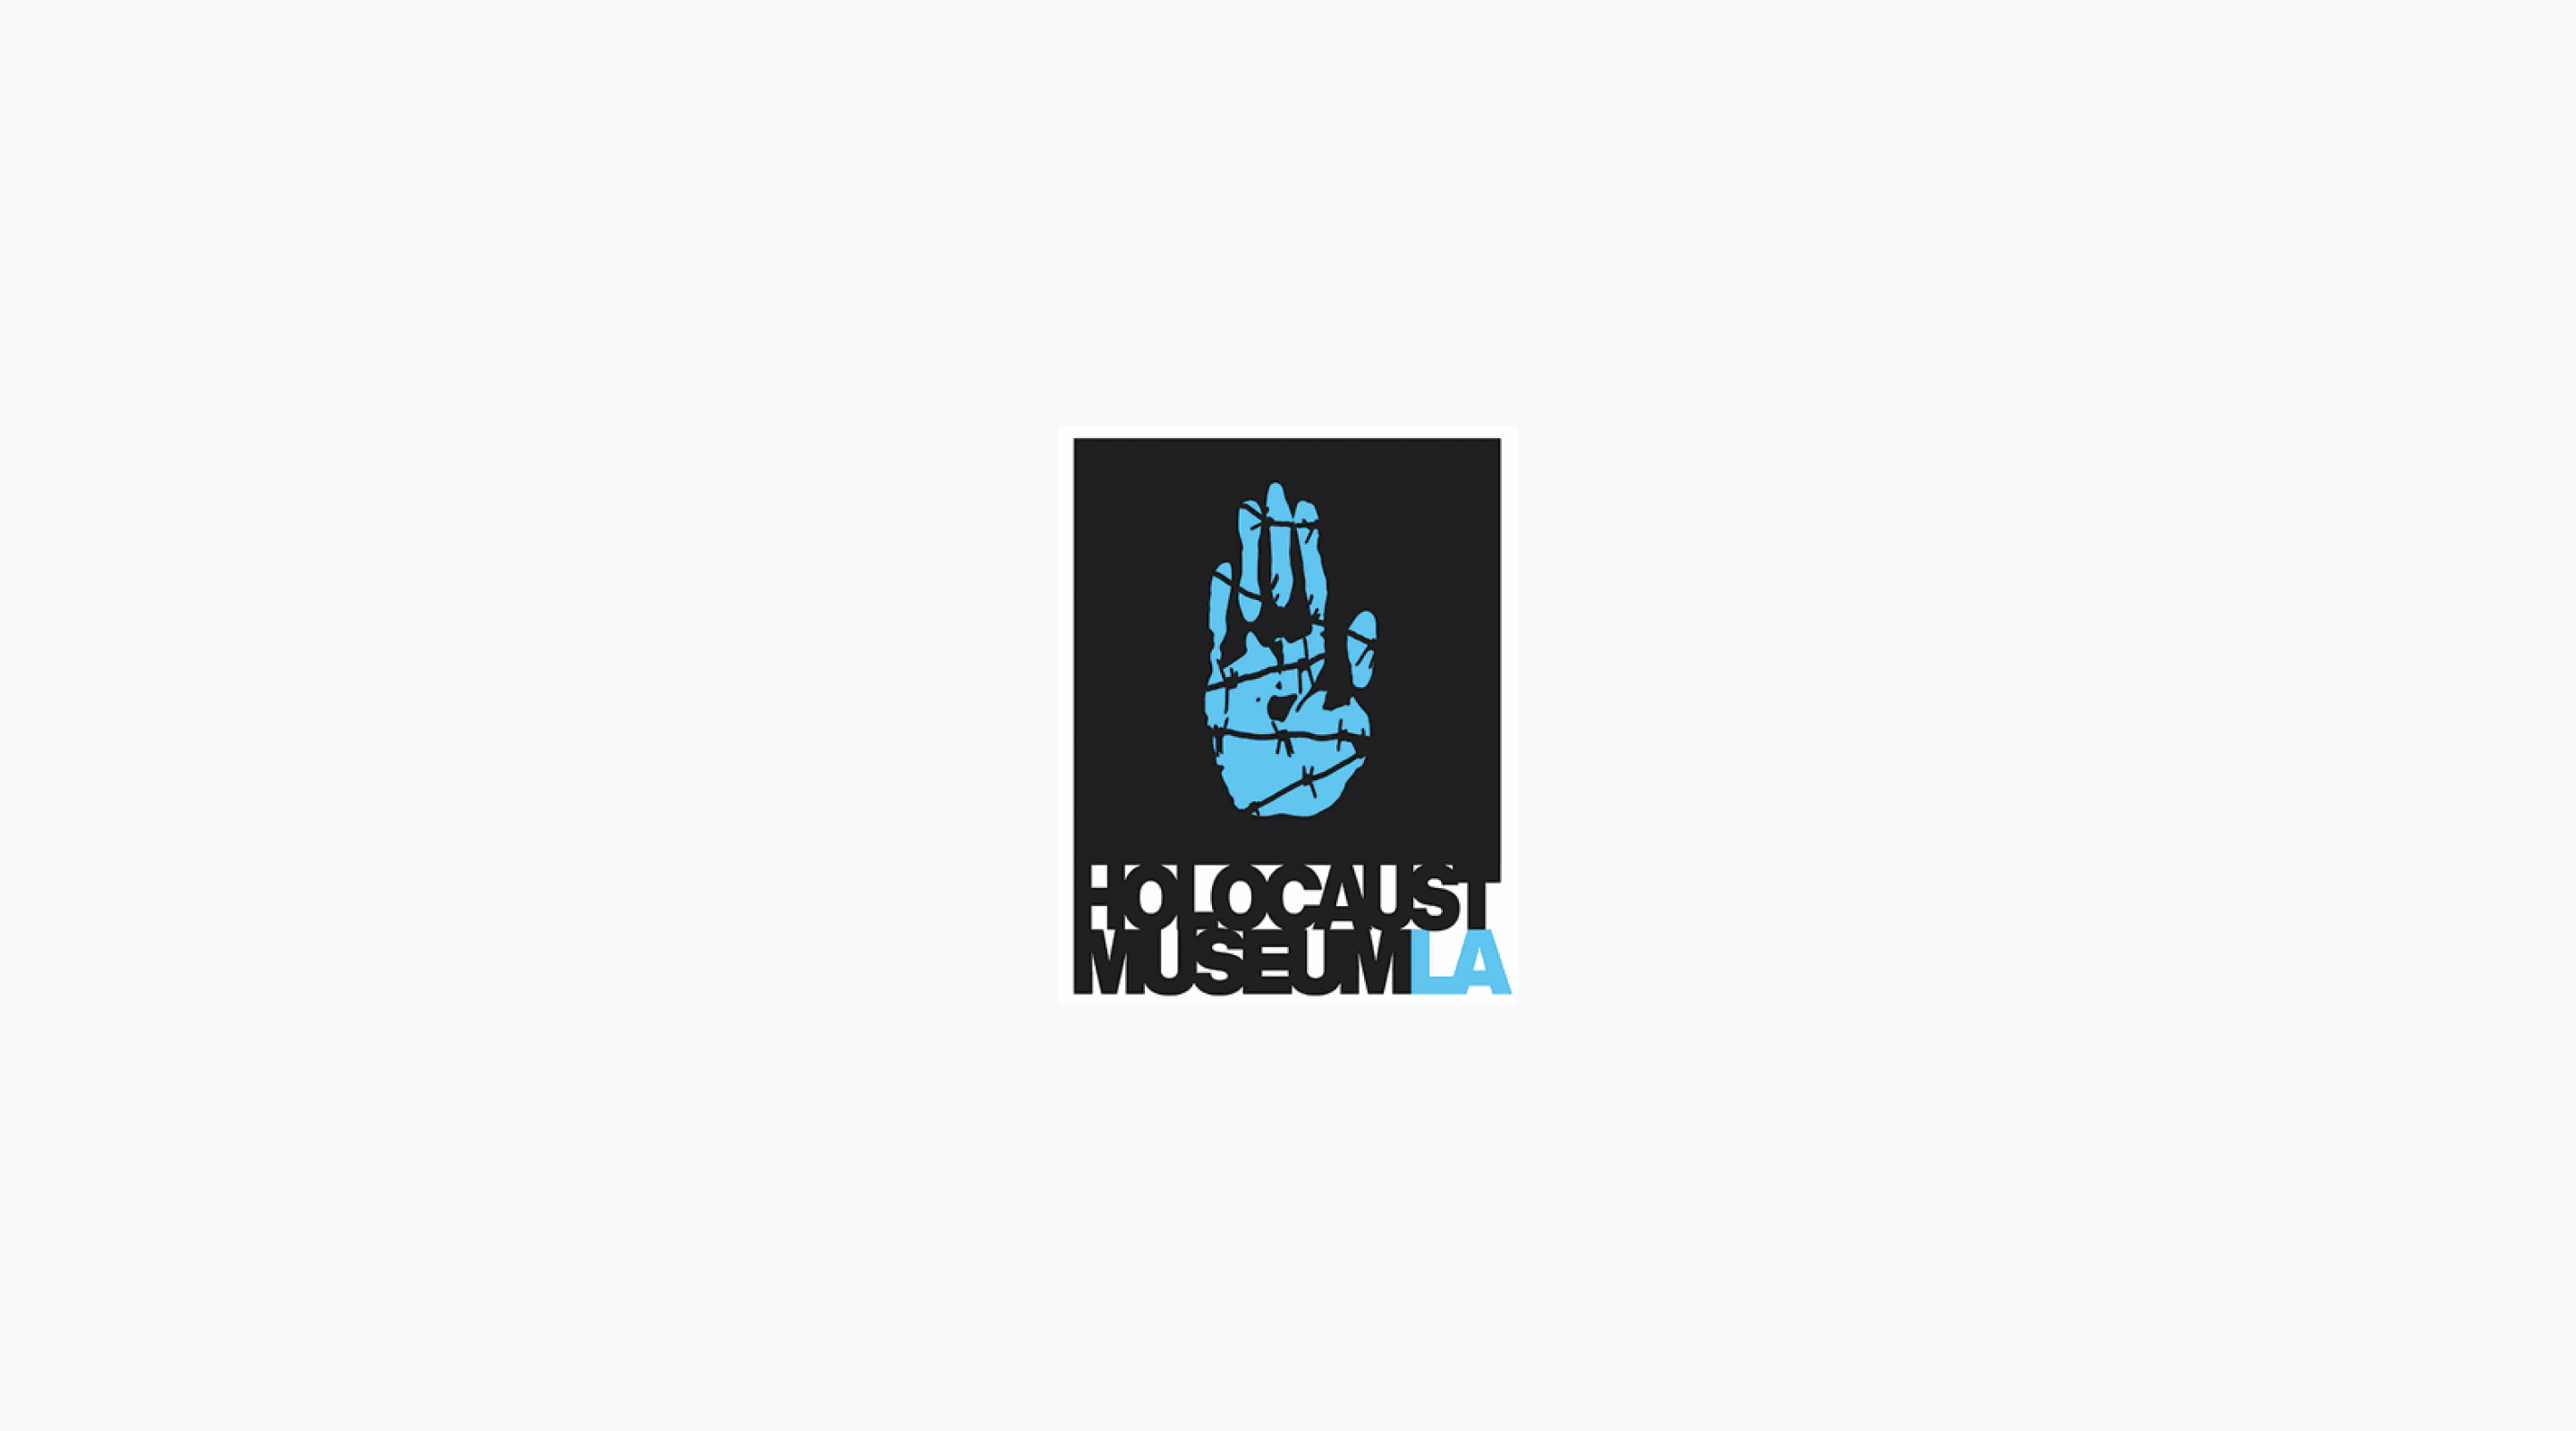 LA Holocaust Museum logo on a neutral background